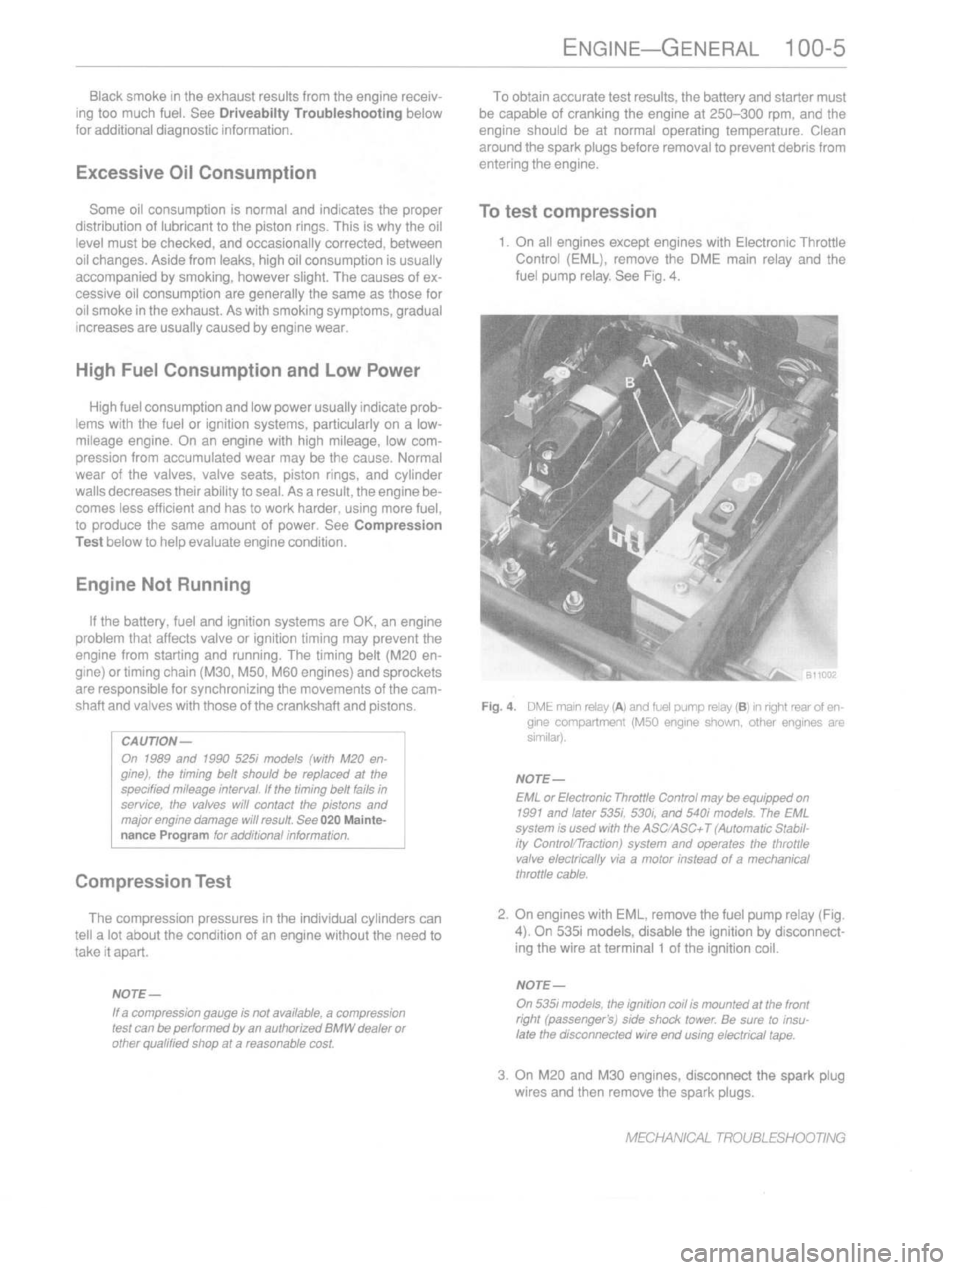 BMW 540i 1989 E34 Service Manual 